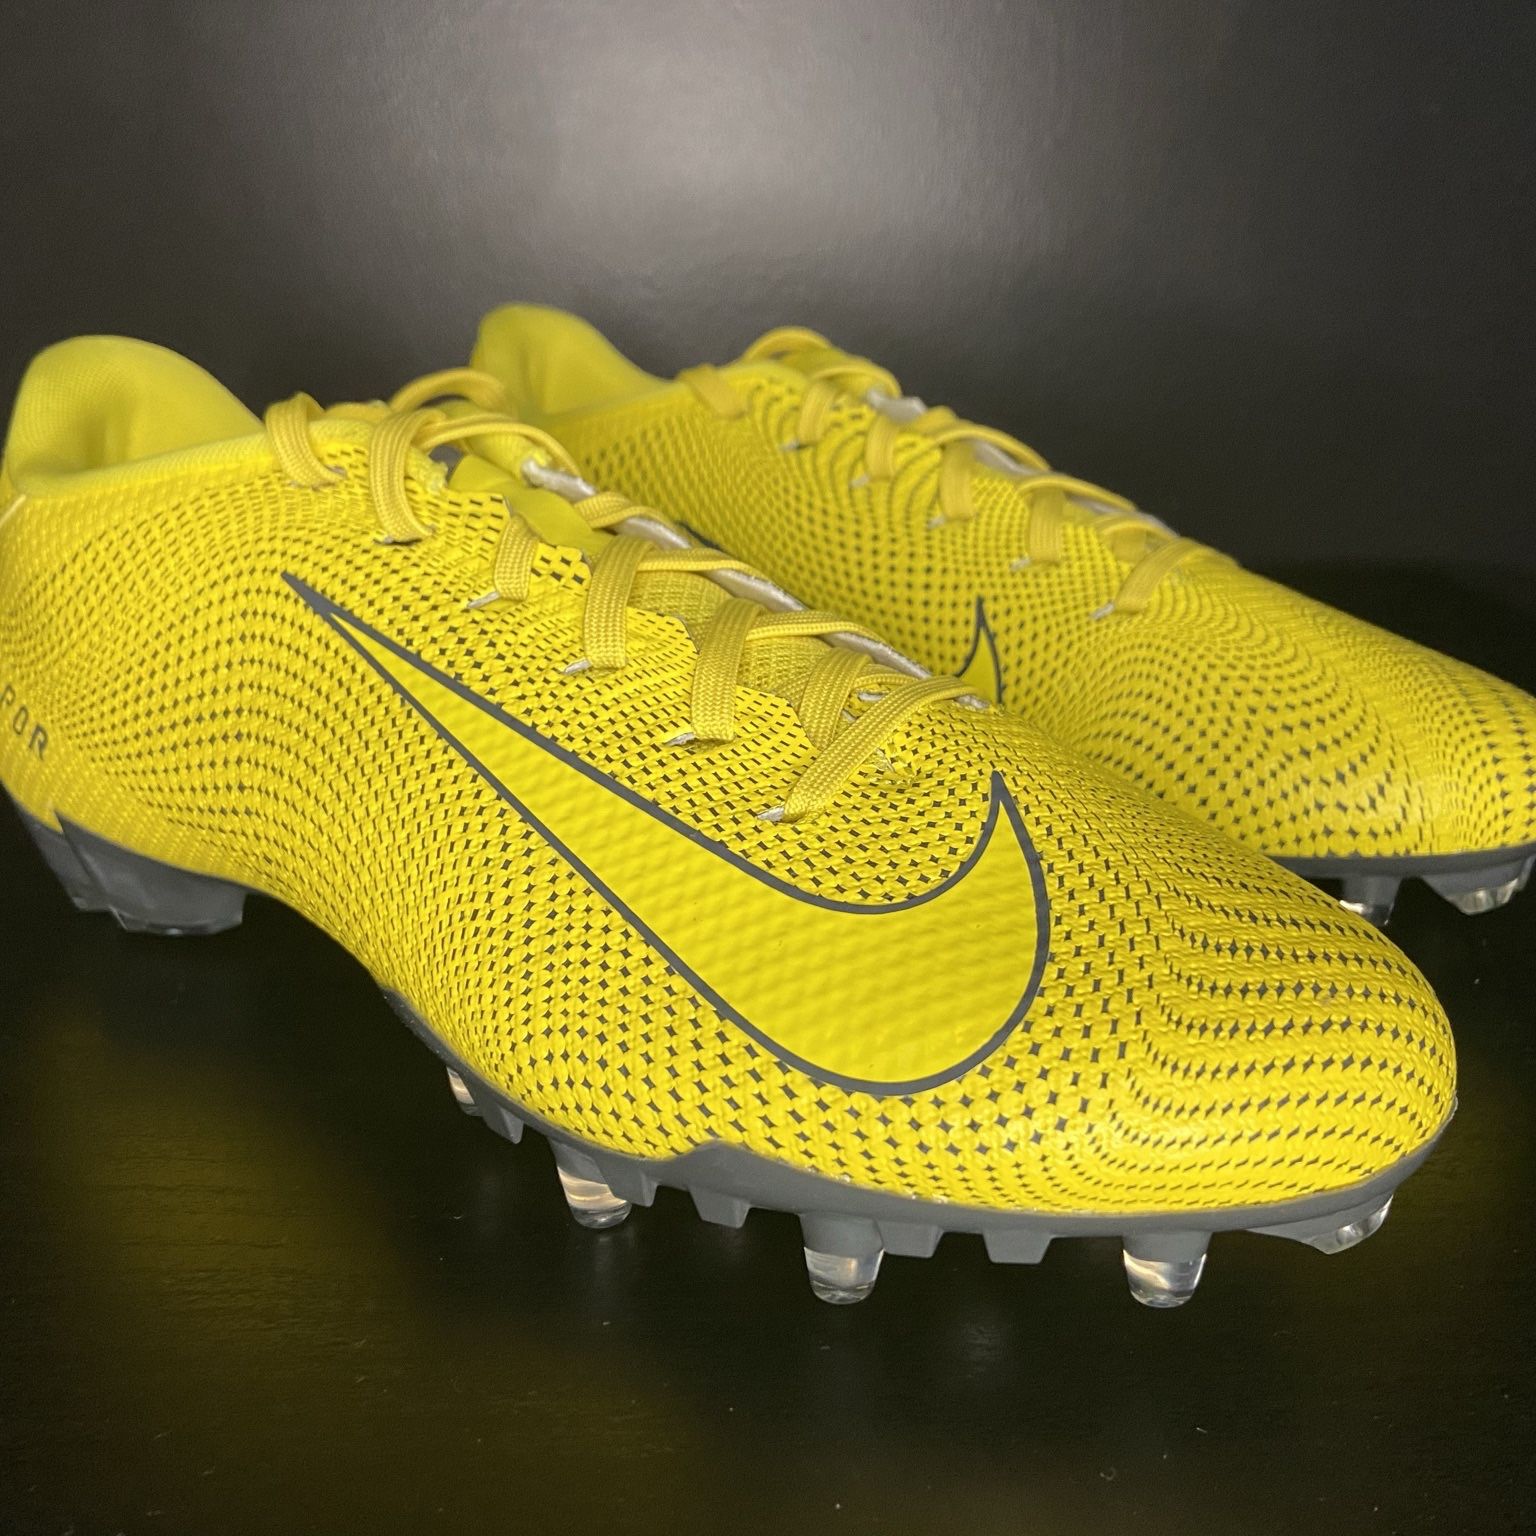 Nike Football Cleats Size 10.5